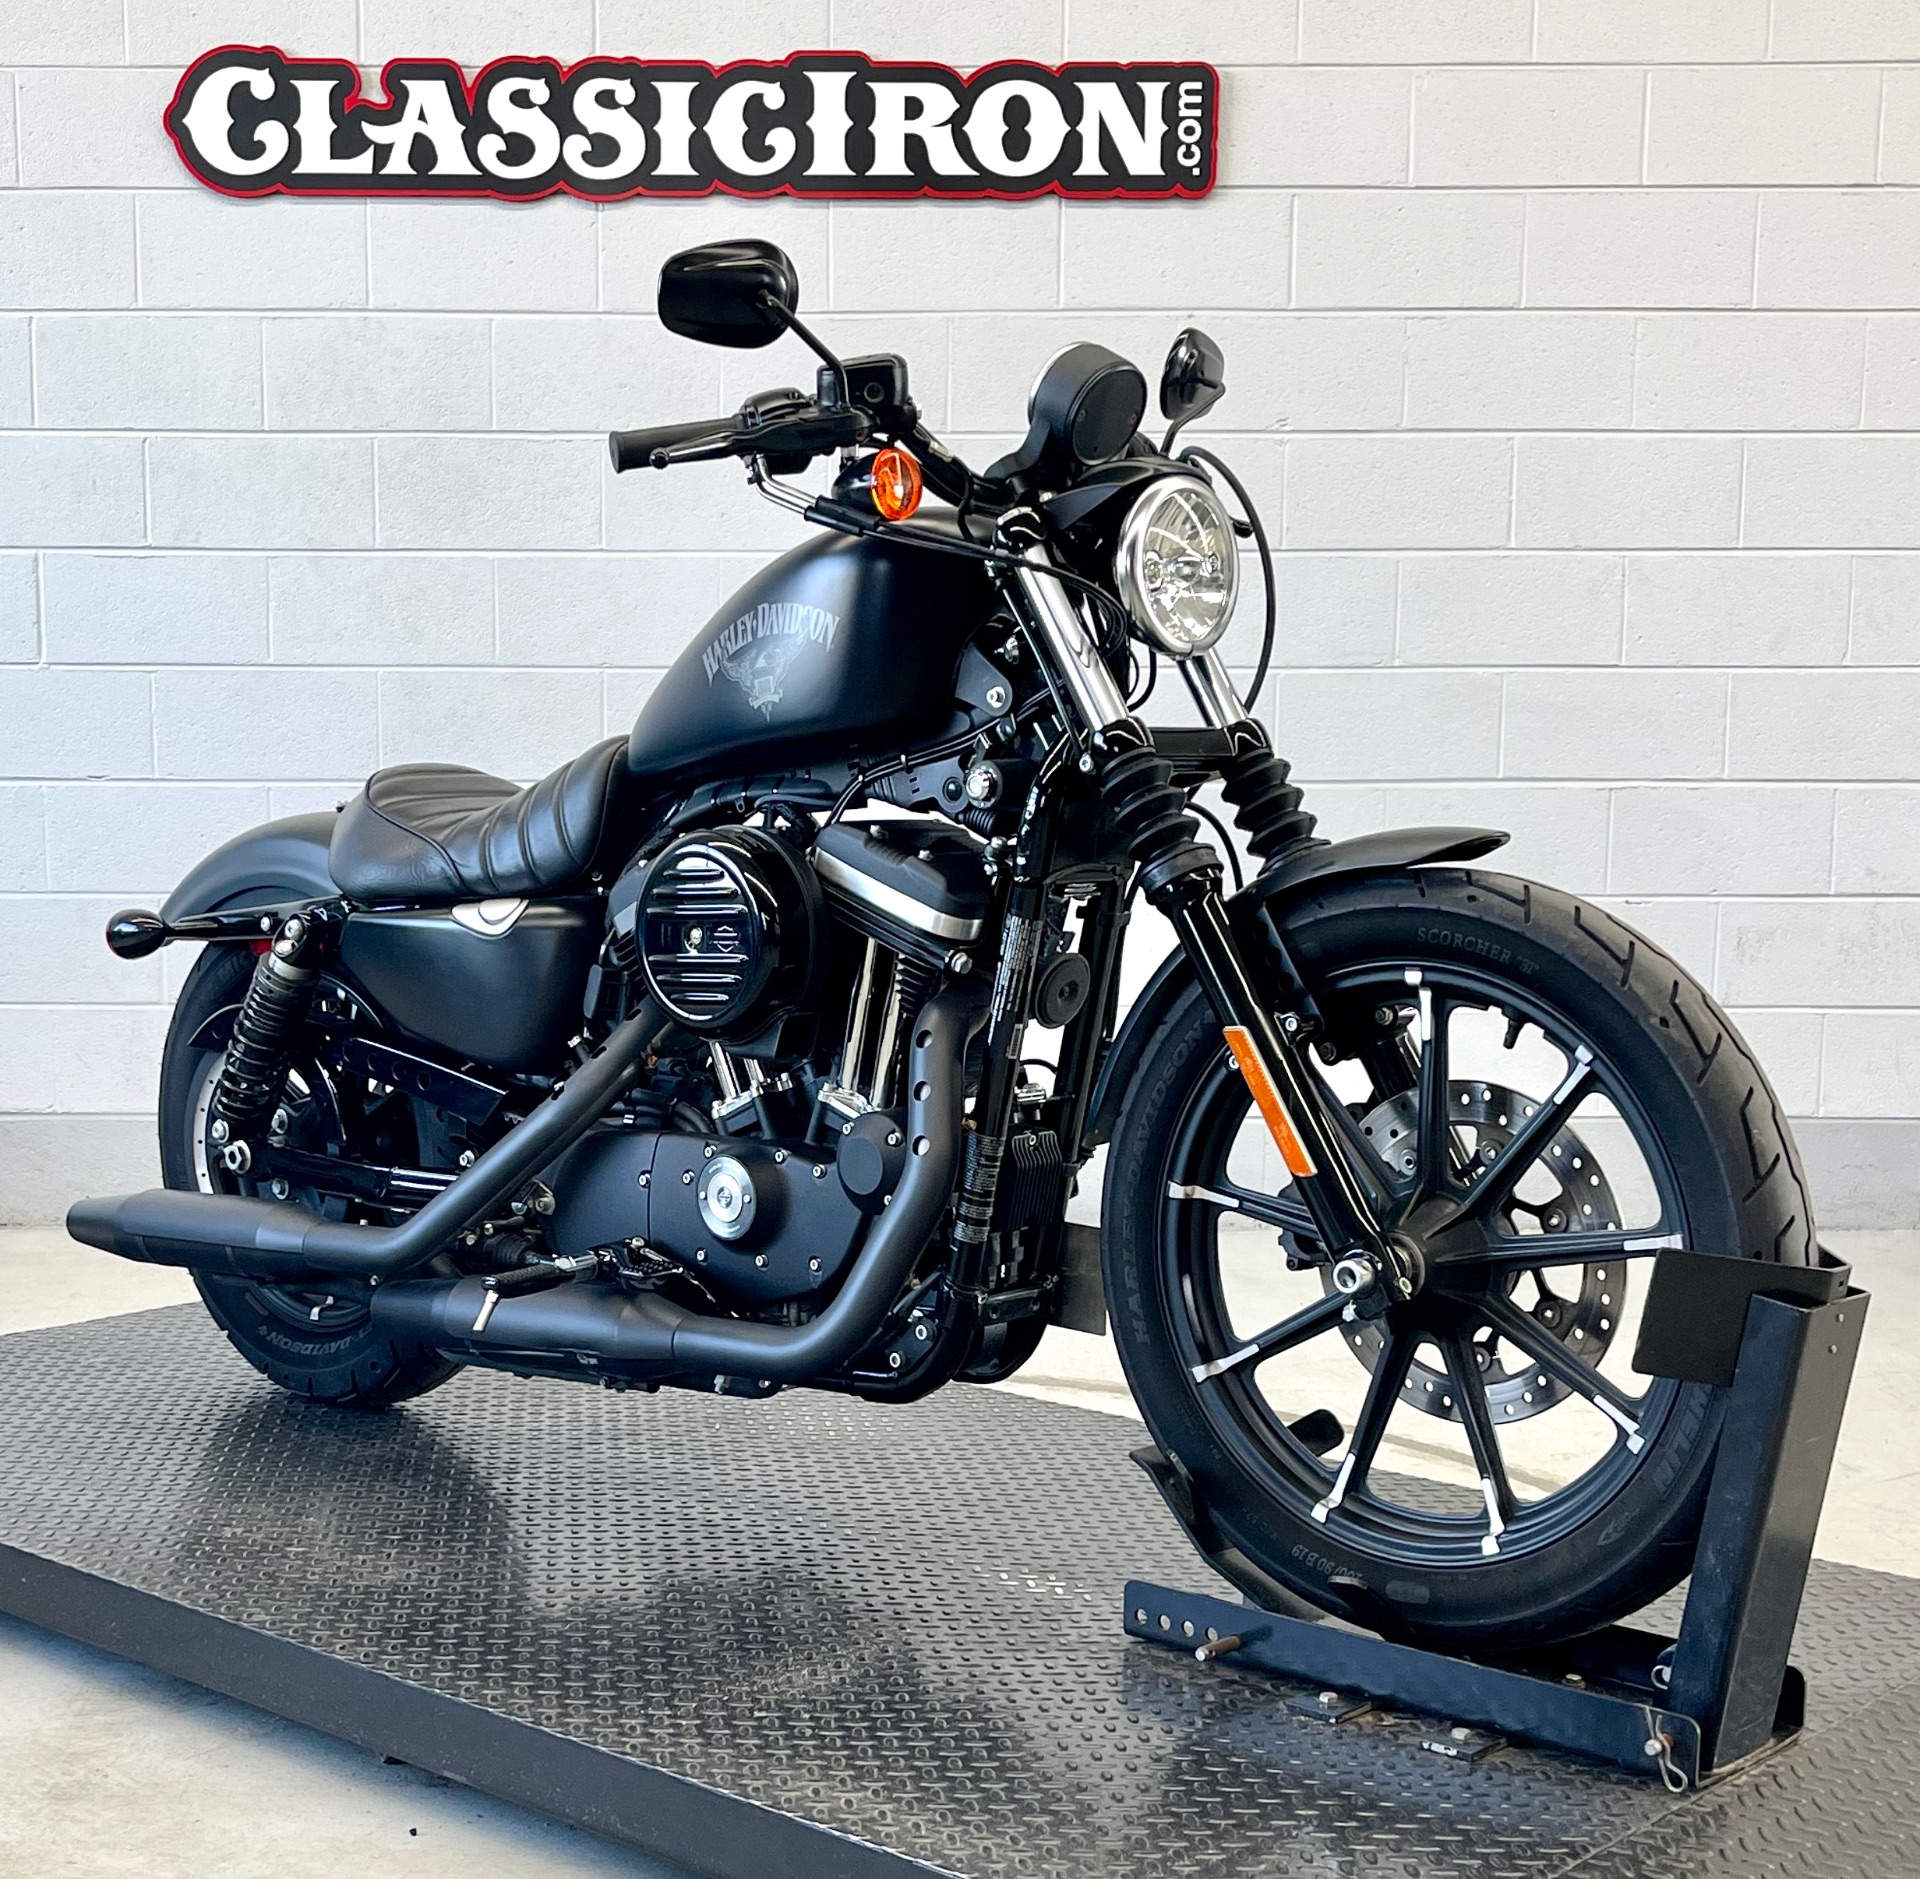 2018 Harley-Davidson Iron 883™ in Fredericksburg, Virginia - Photo 2